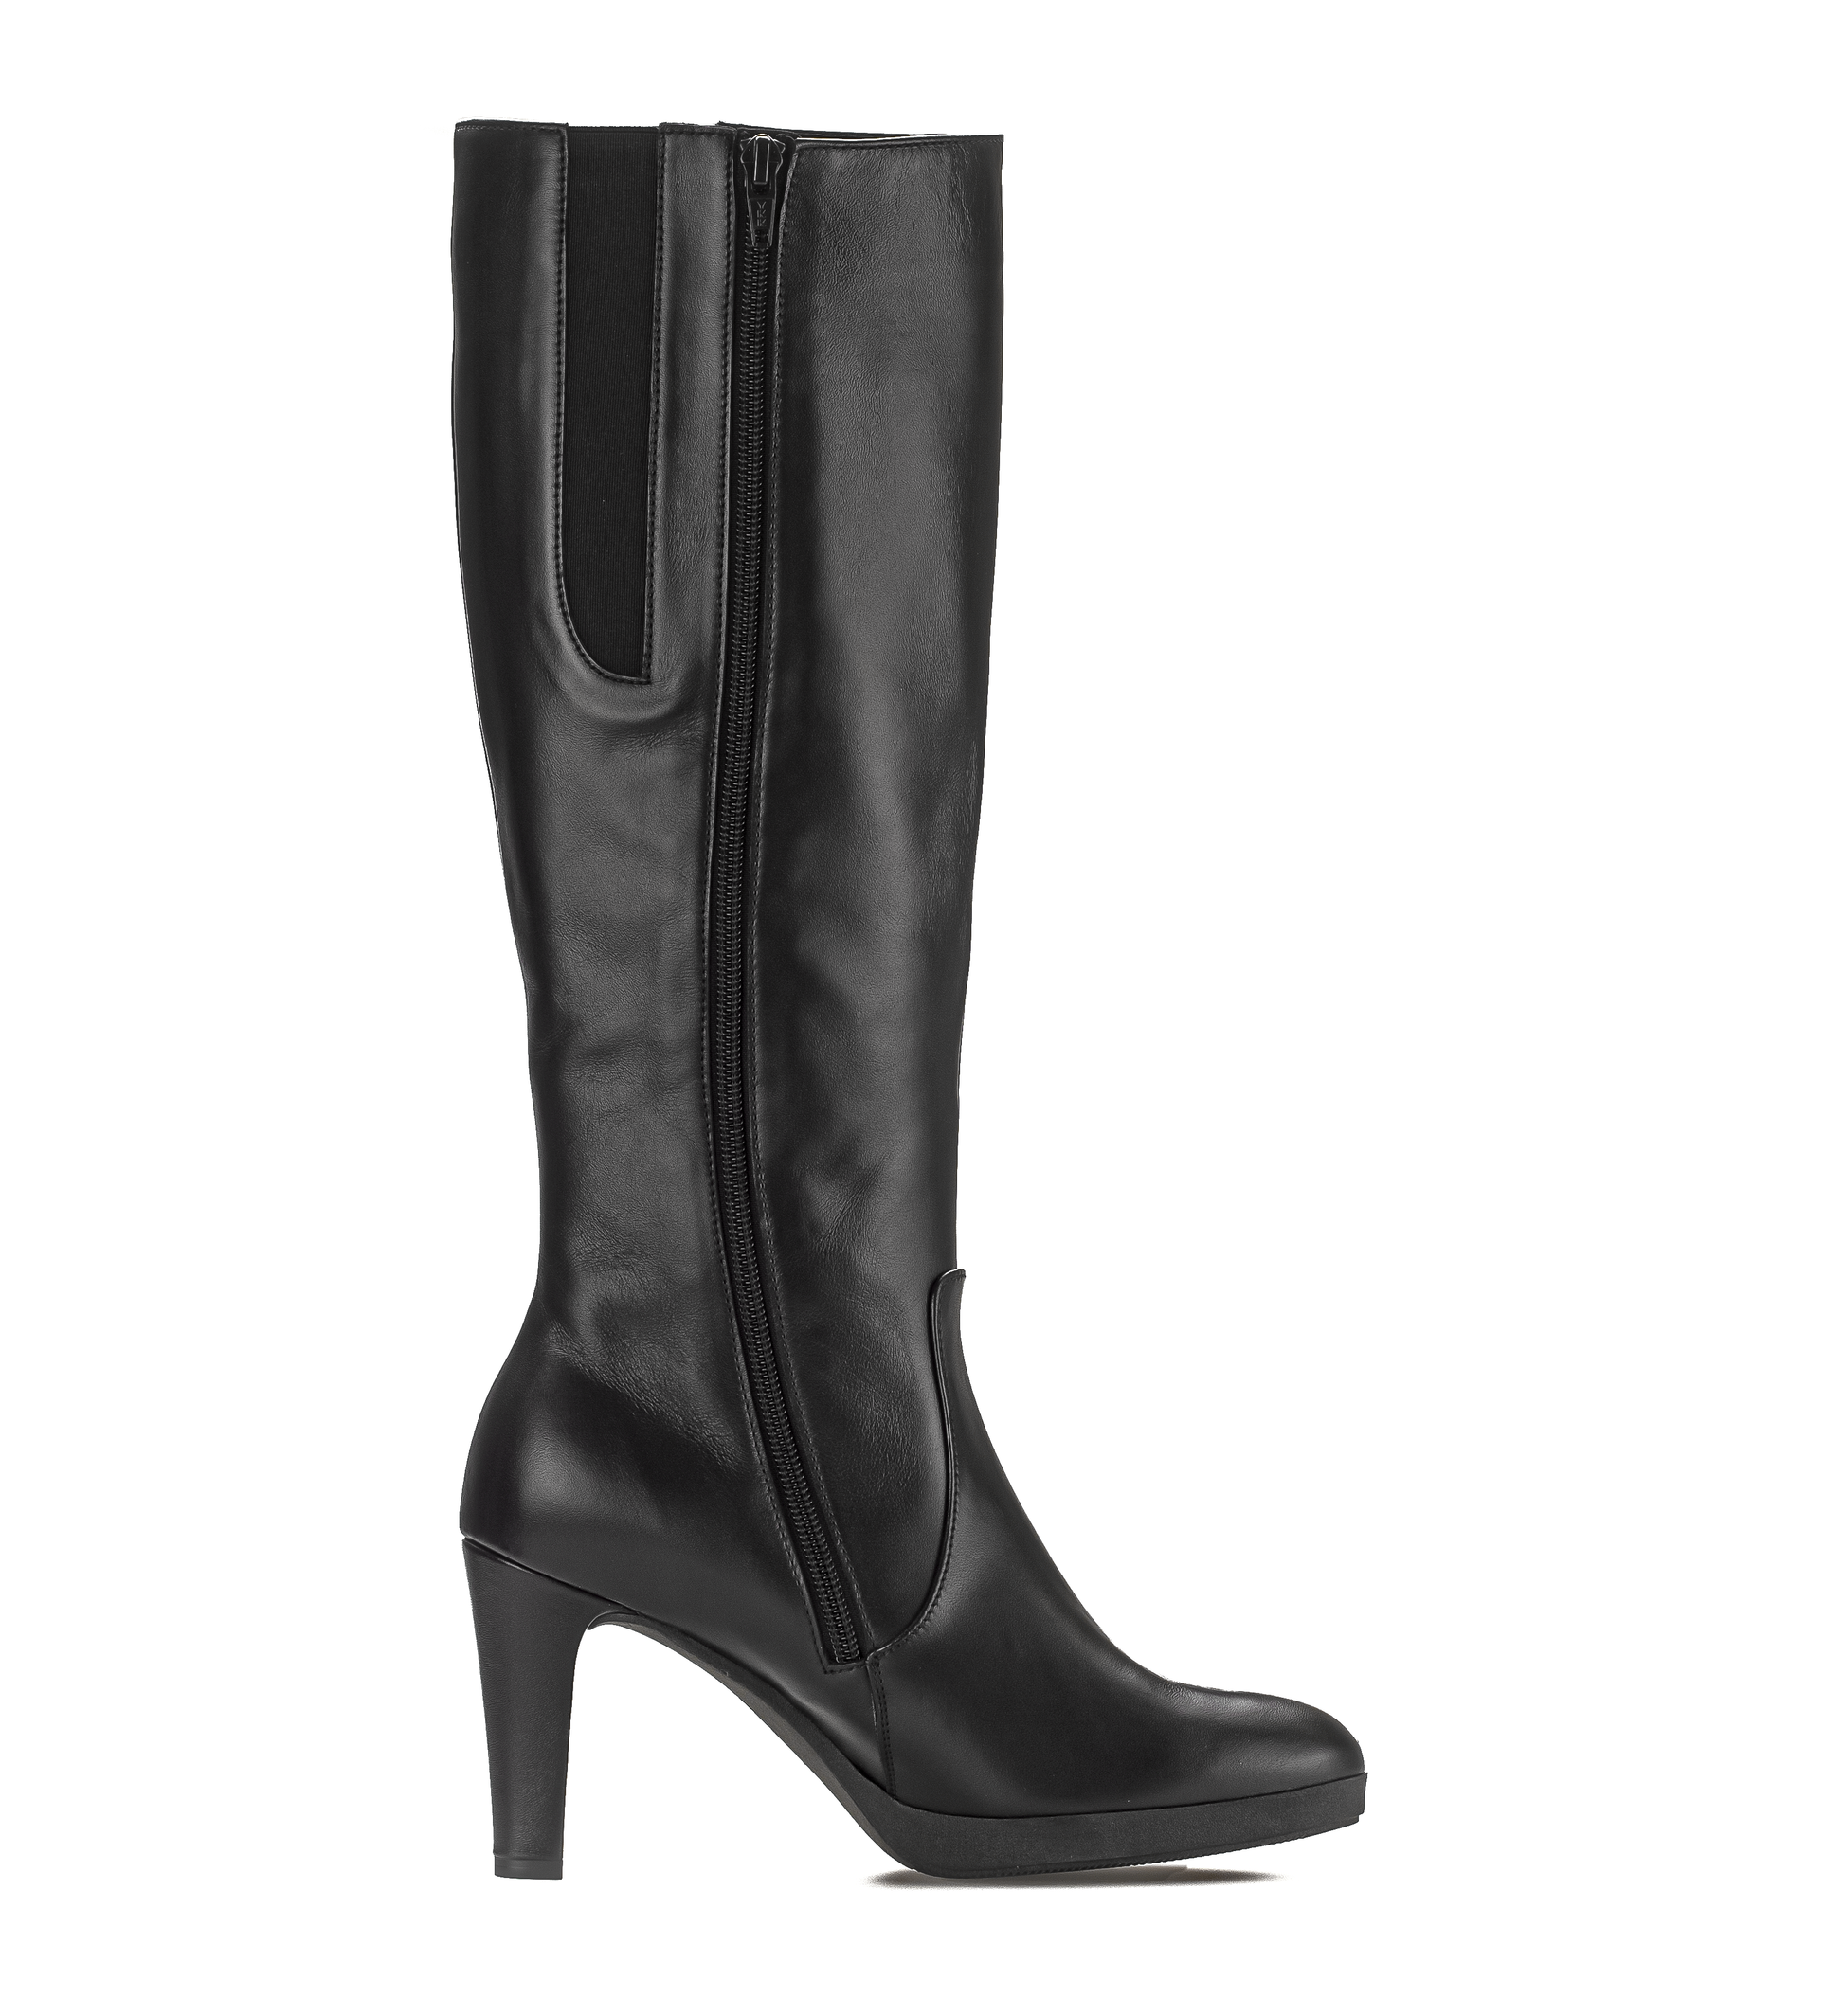 High, Knee High Boots GABOR 71.679.11 Salbei, GenesinlifeShops - End  Designer Fashion Store Shopping